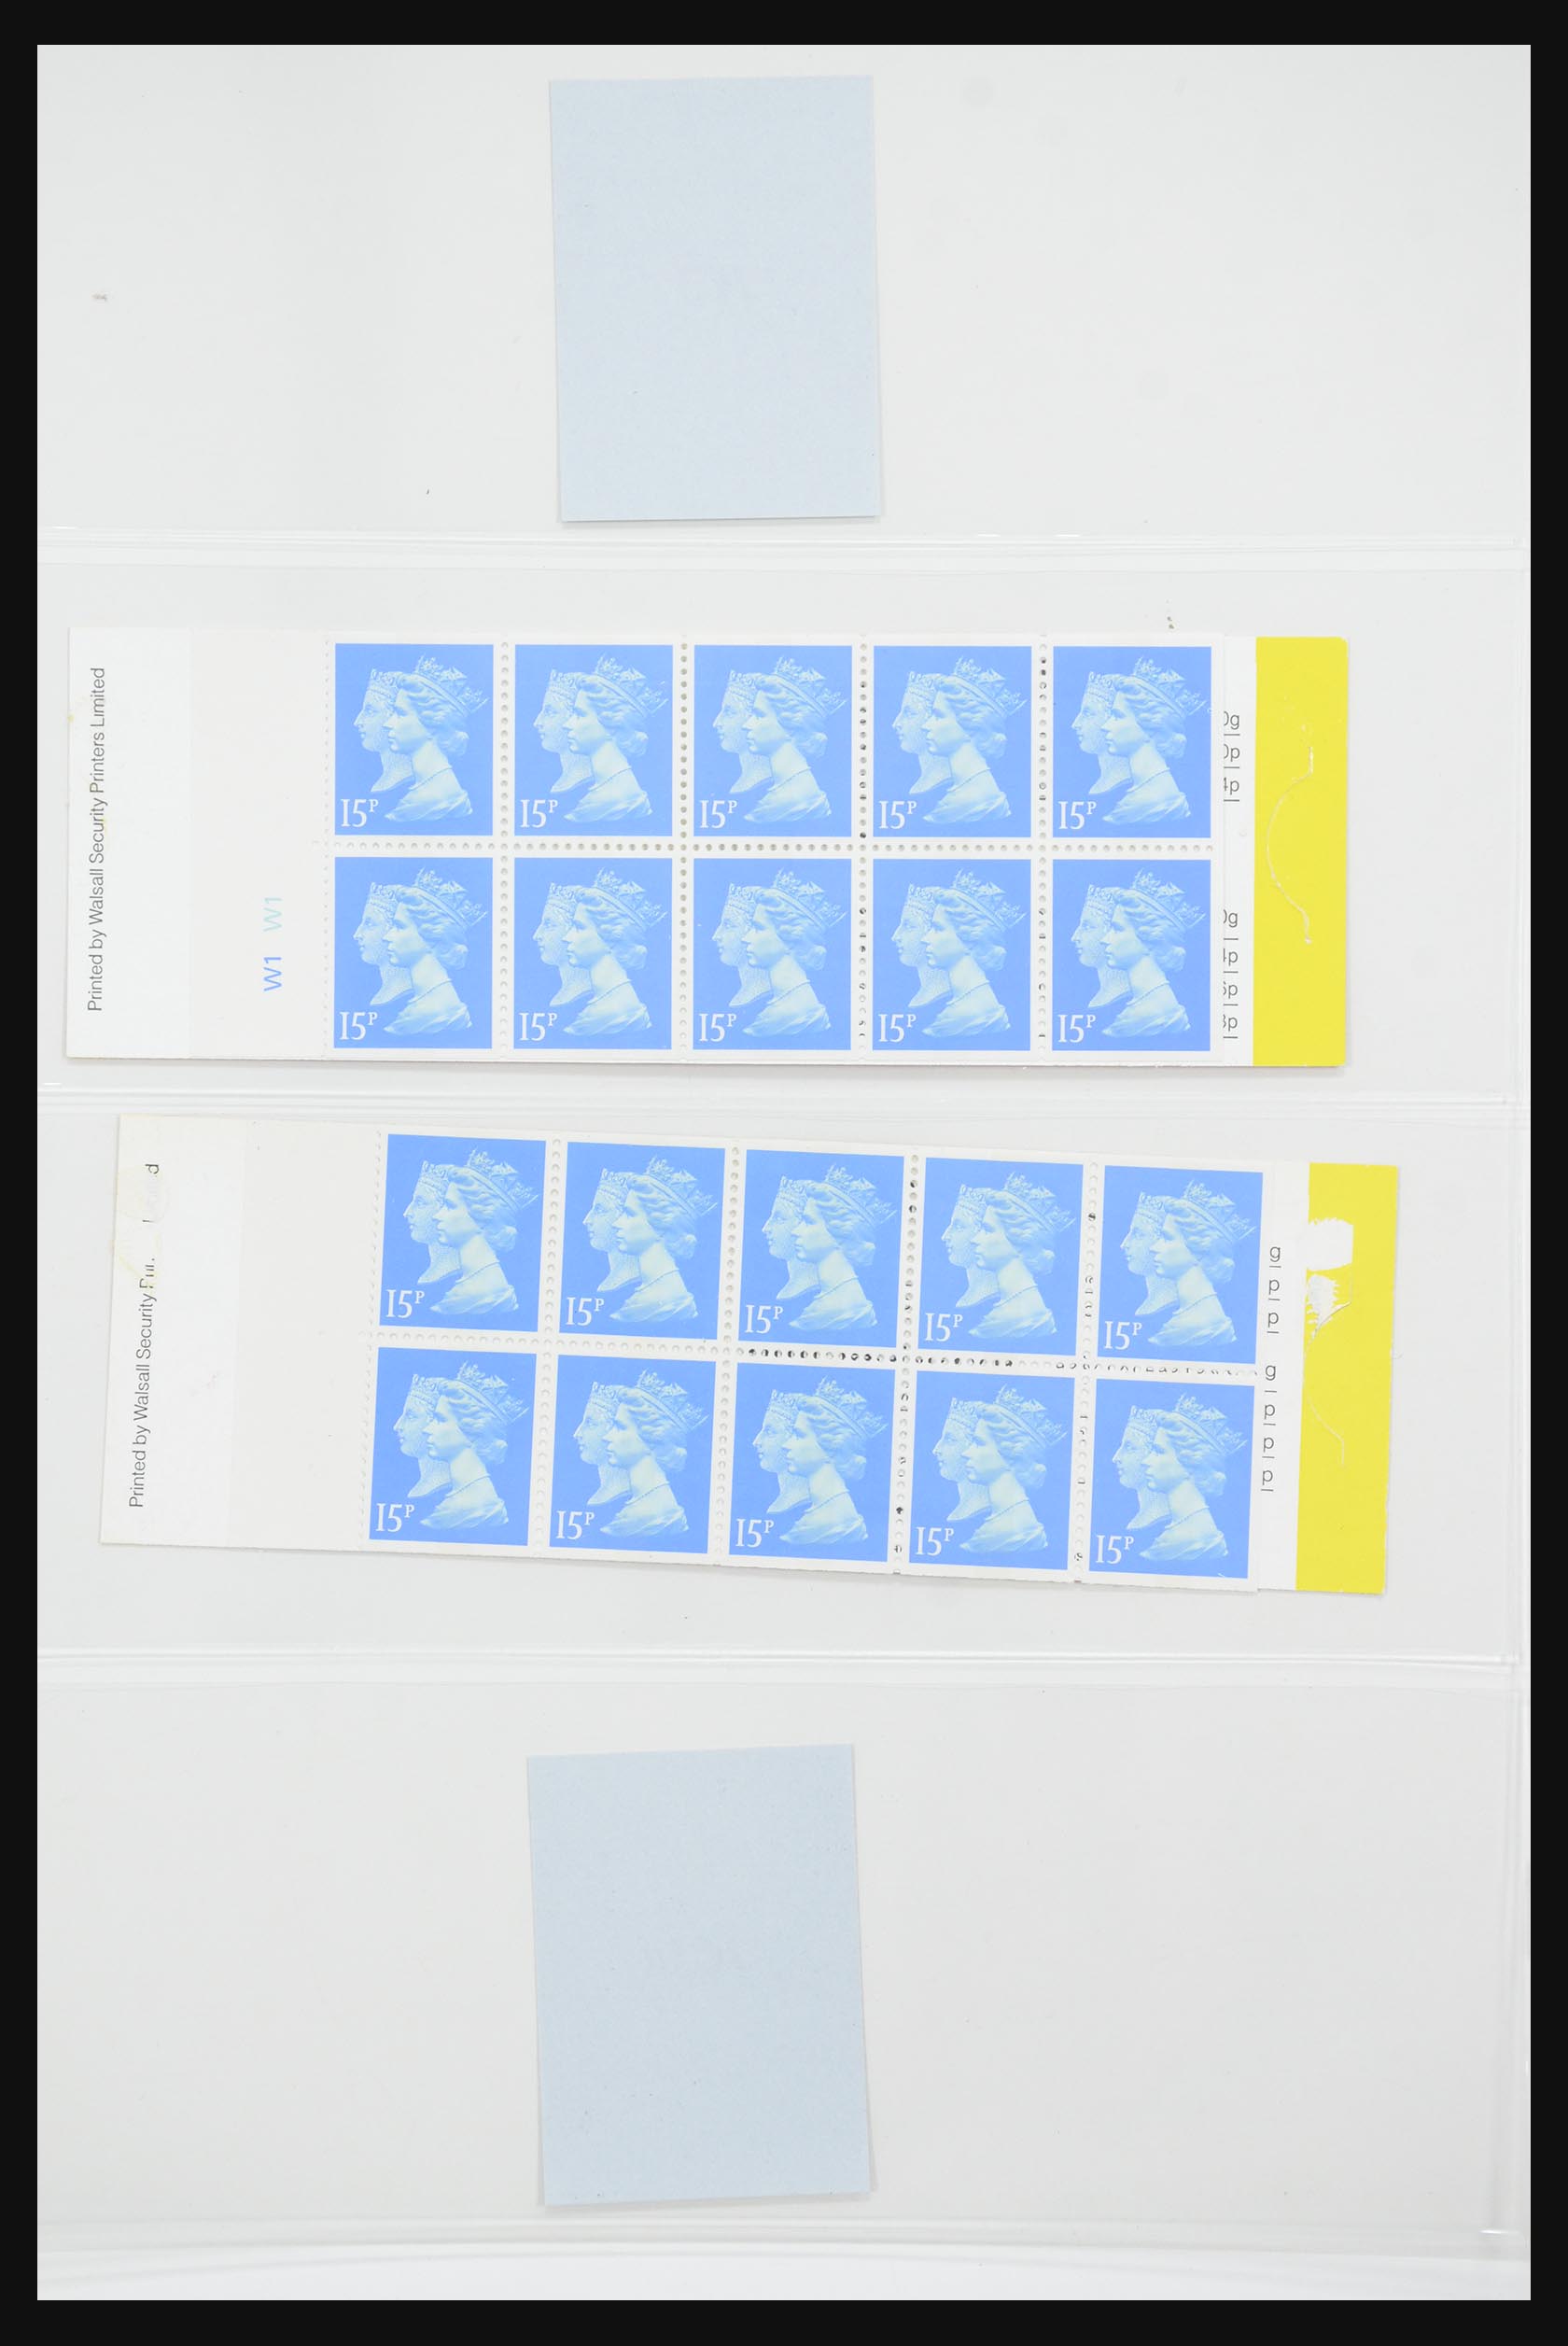 31960 186 - 31960 Great Britain stampbooklets 1989-2000.